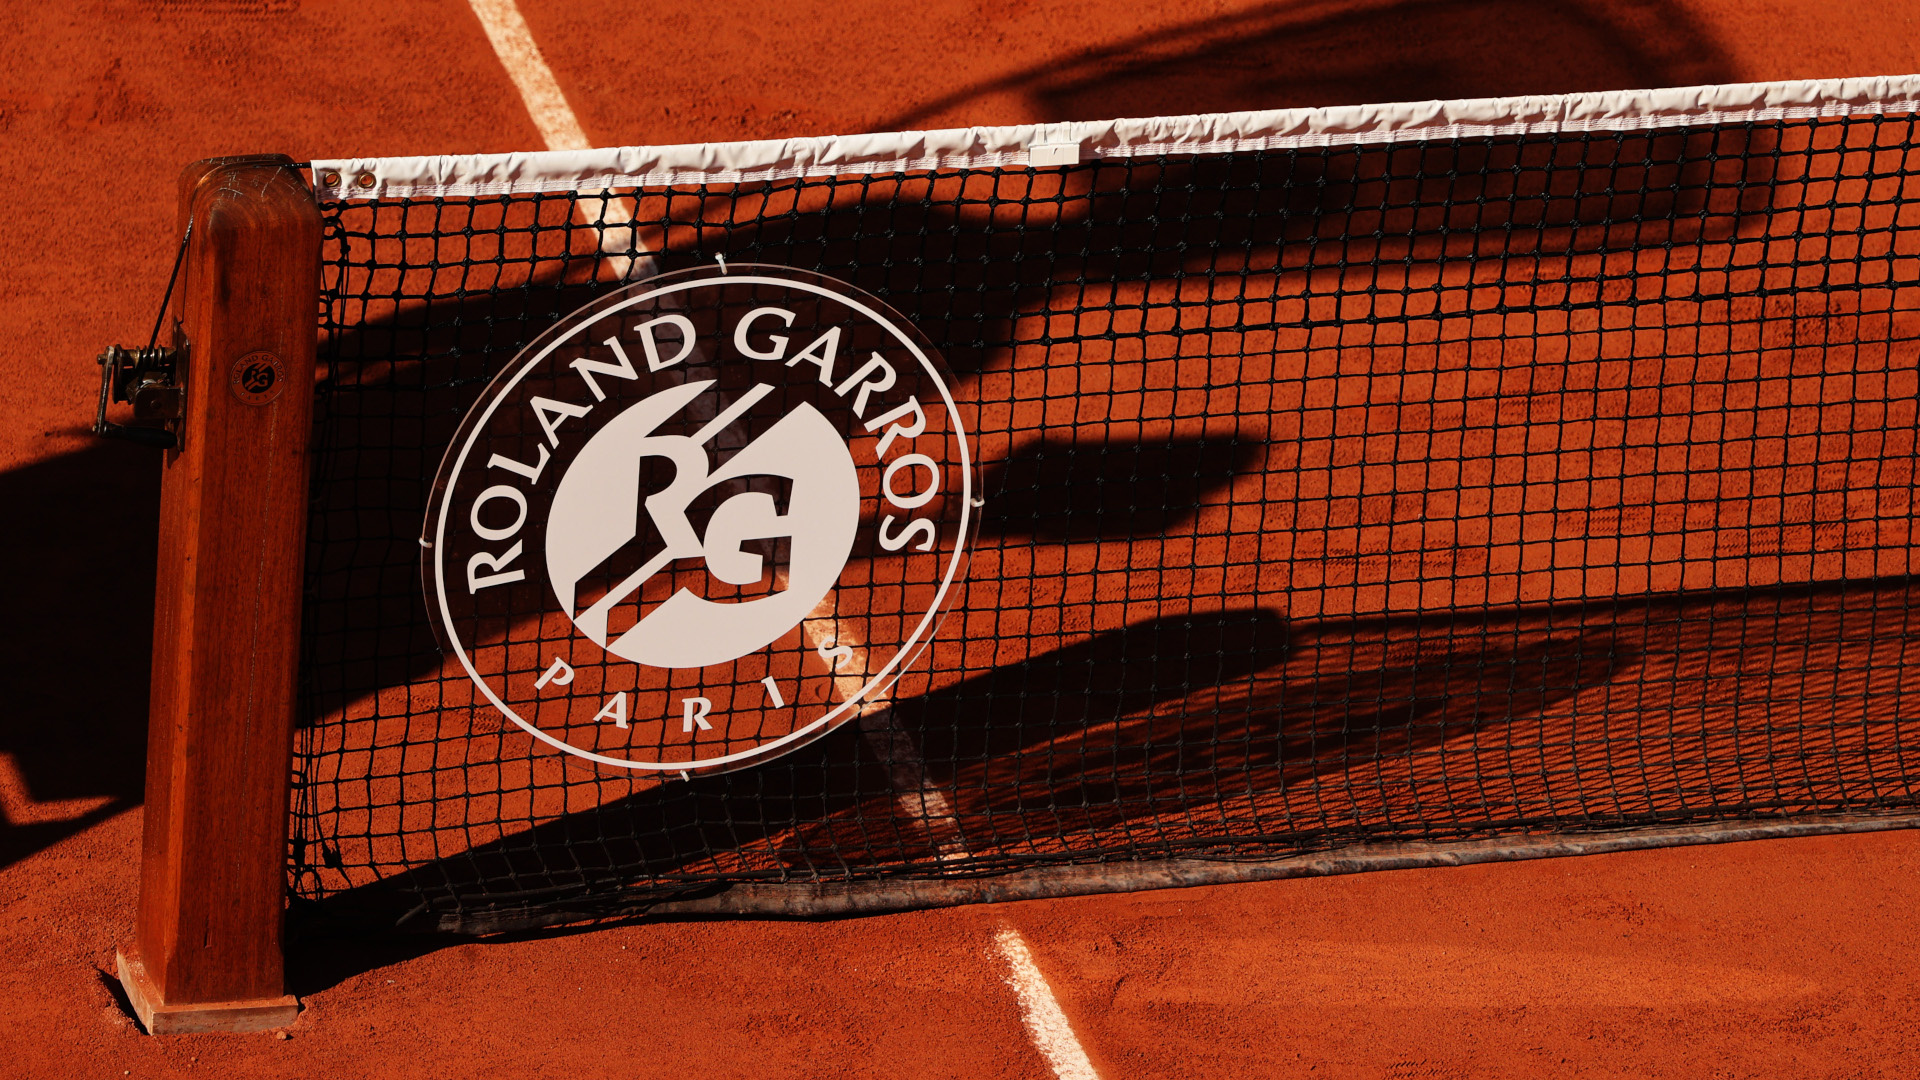 French Open live stream, Finals week tennis, Roland Garros, Worldwide coverage, 1920x1080 Full HD Desktop